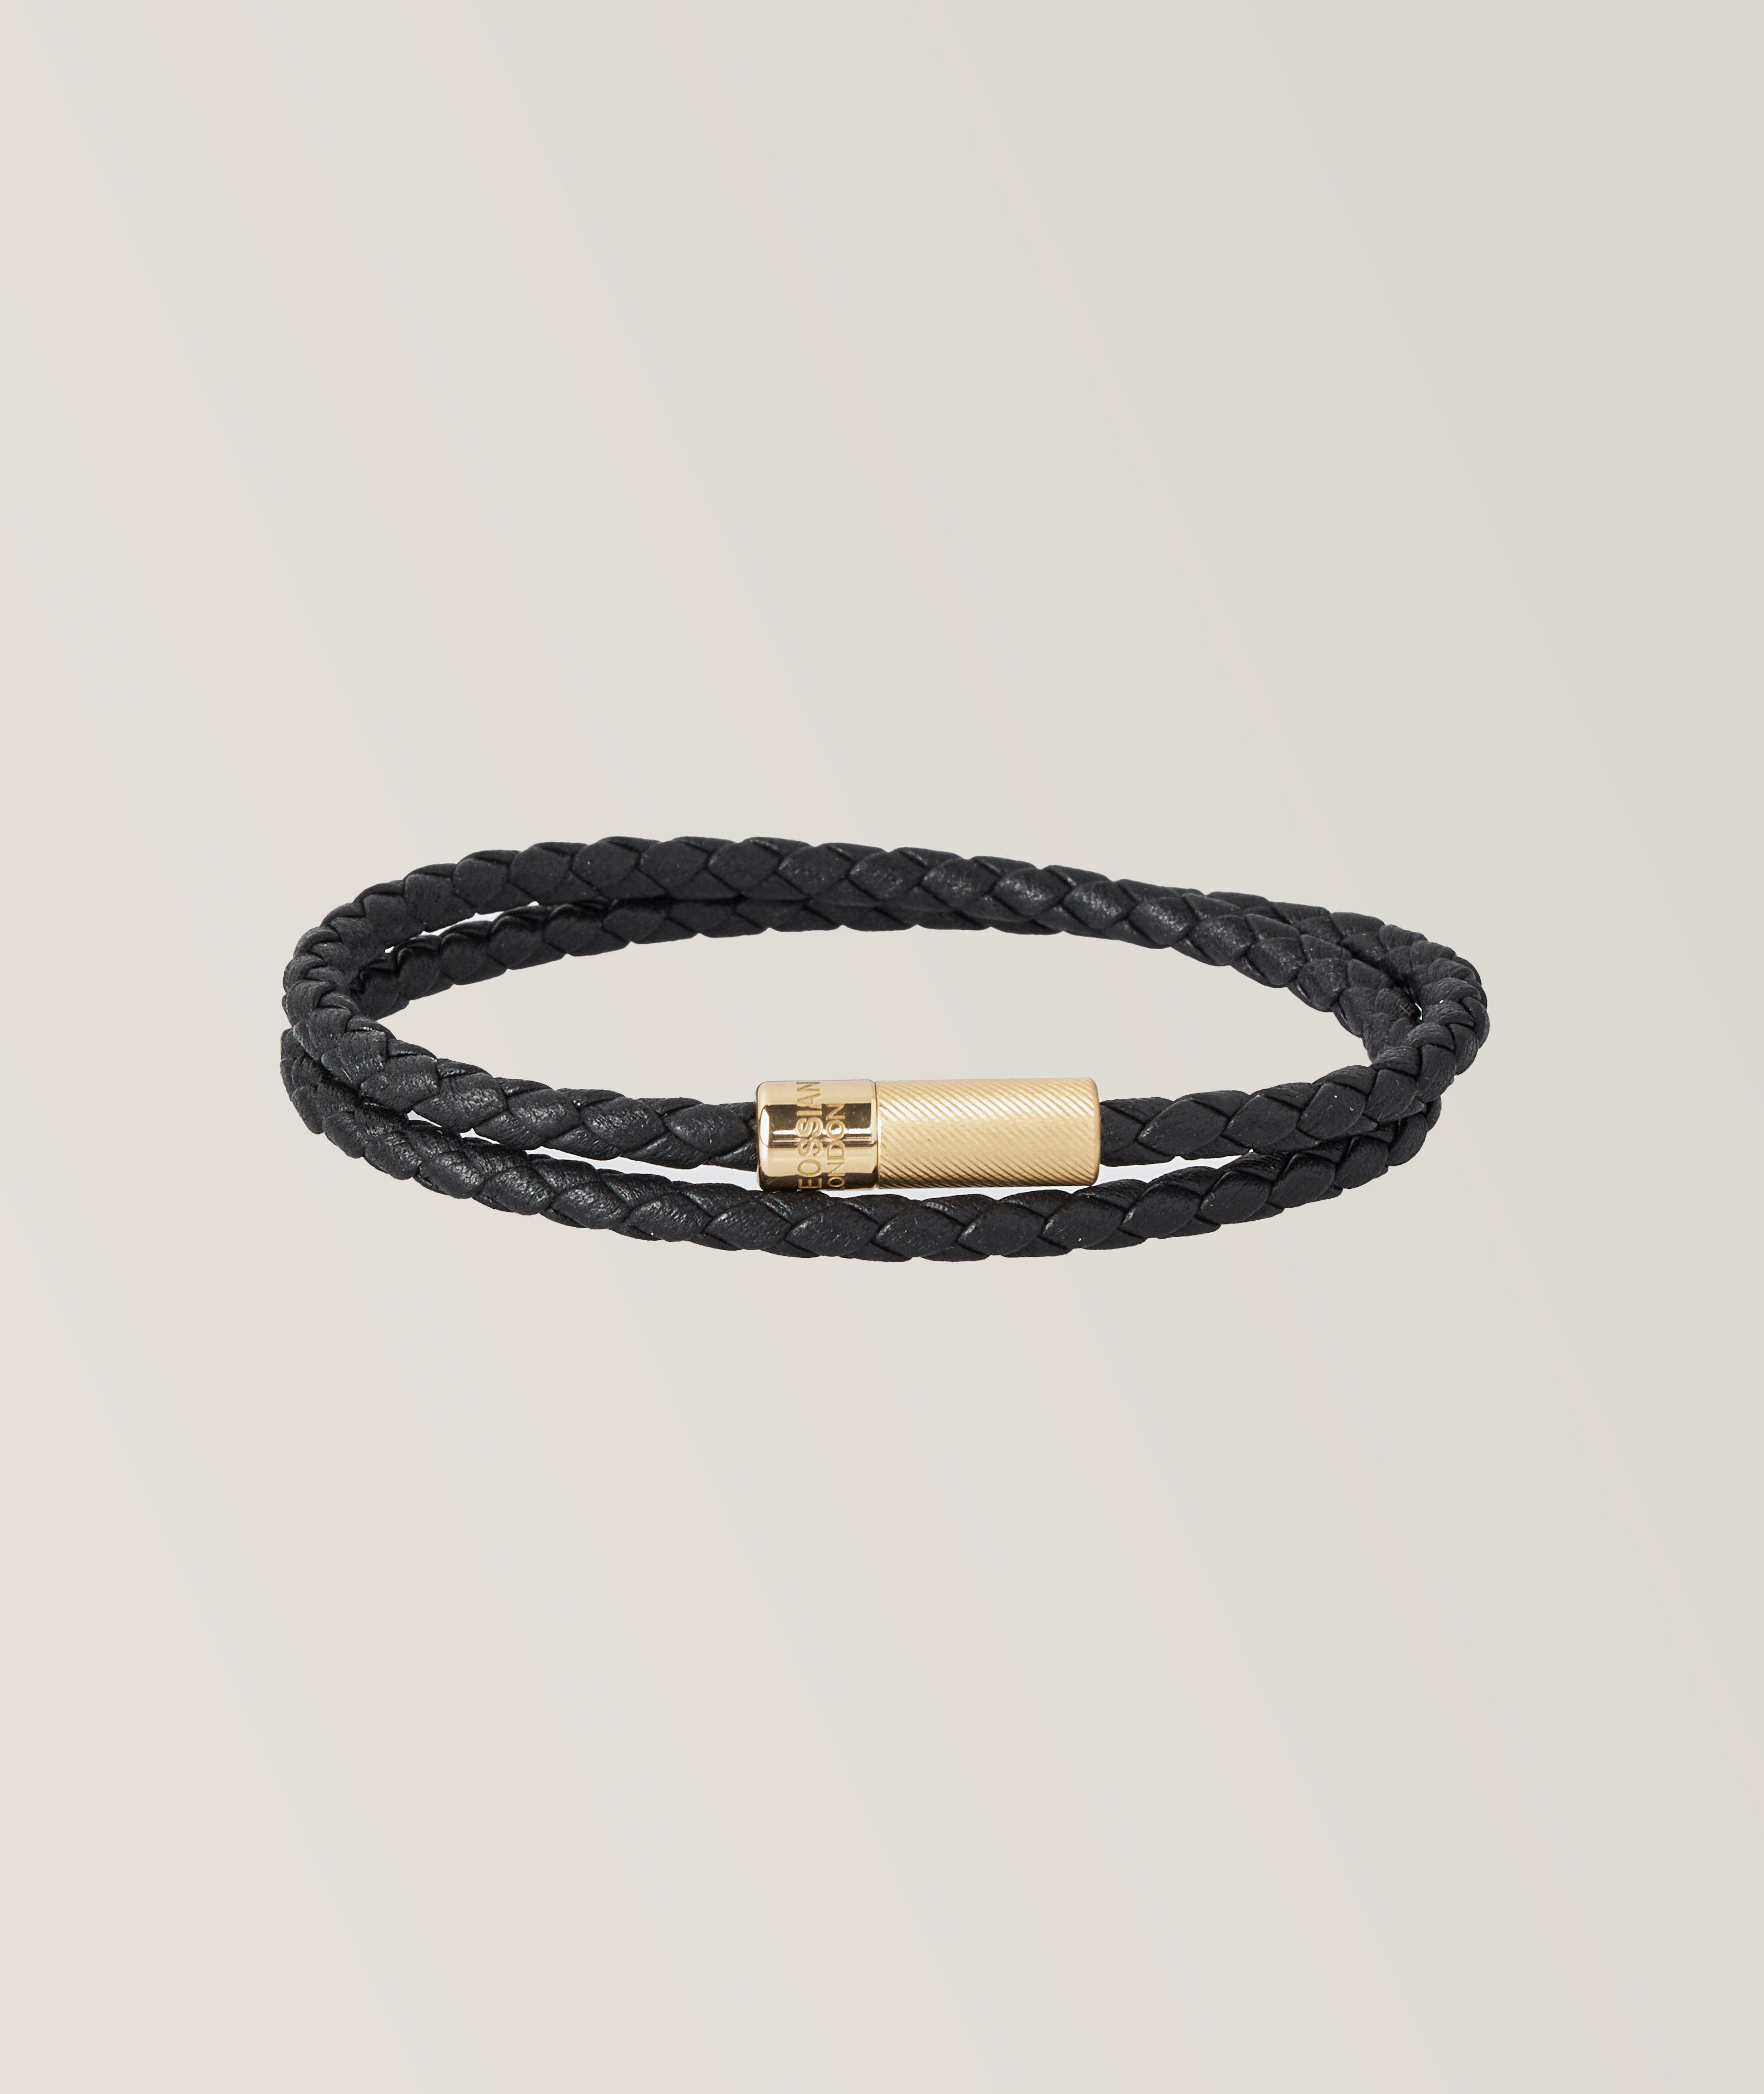 Tateossian Pop Rigato Double Wrap Leather Bracelet